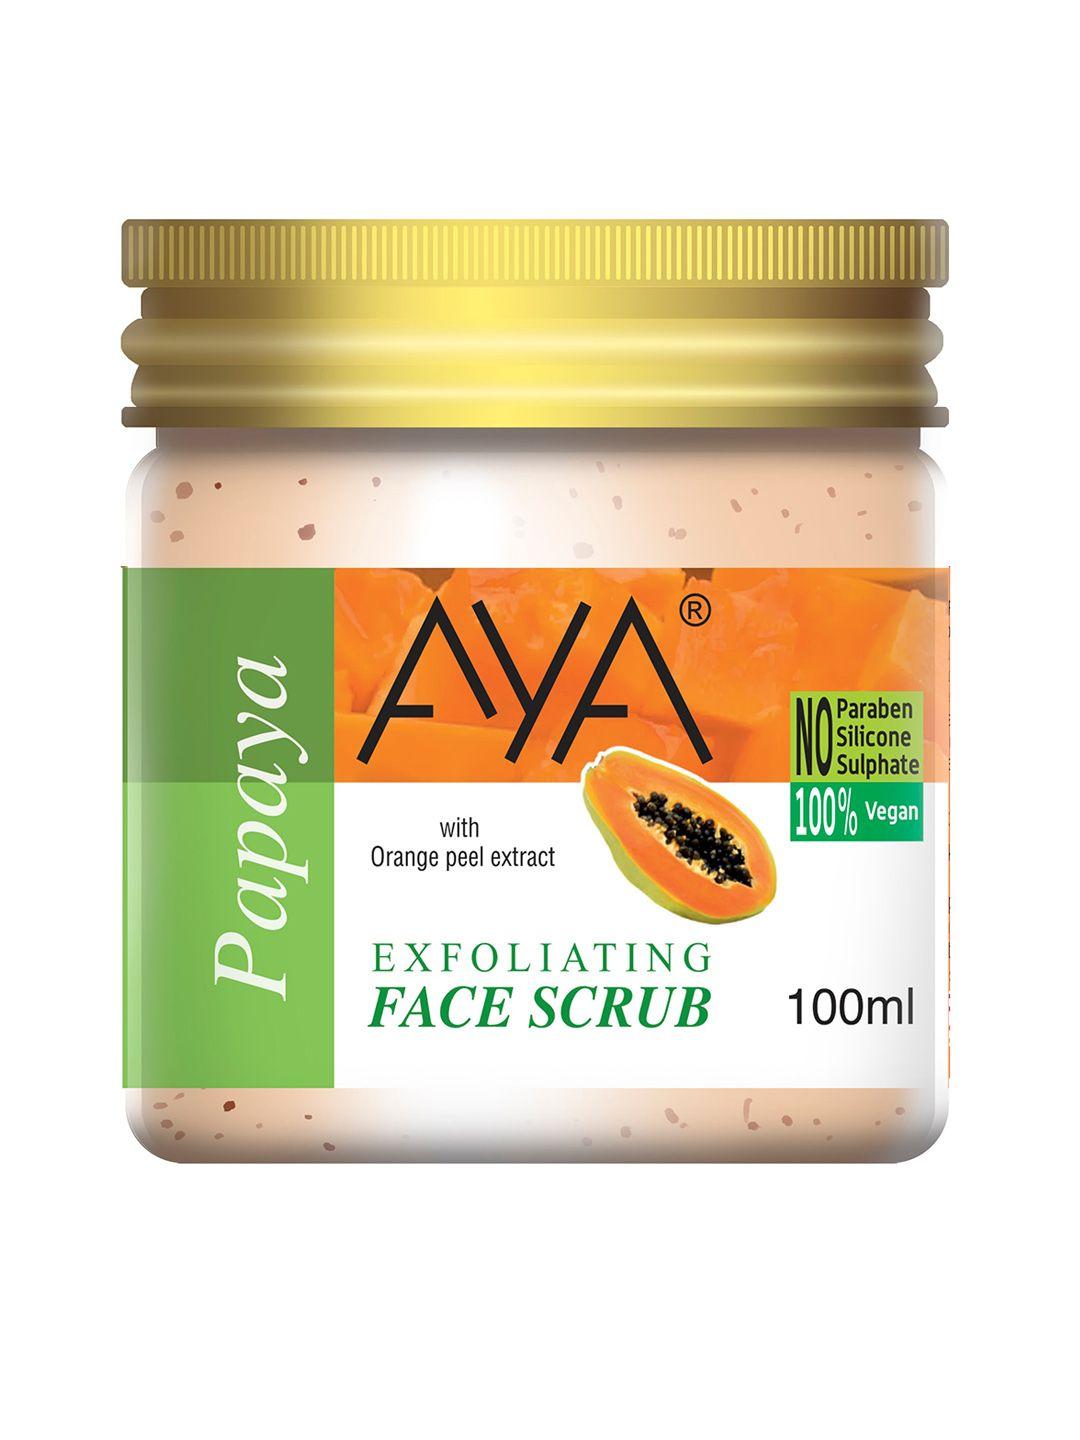 aya papaya vitamin e exfoliating face scrub 100 ml